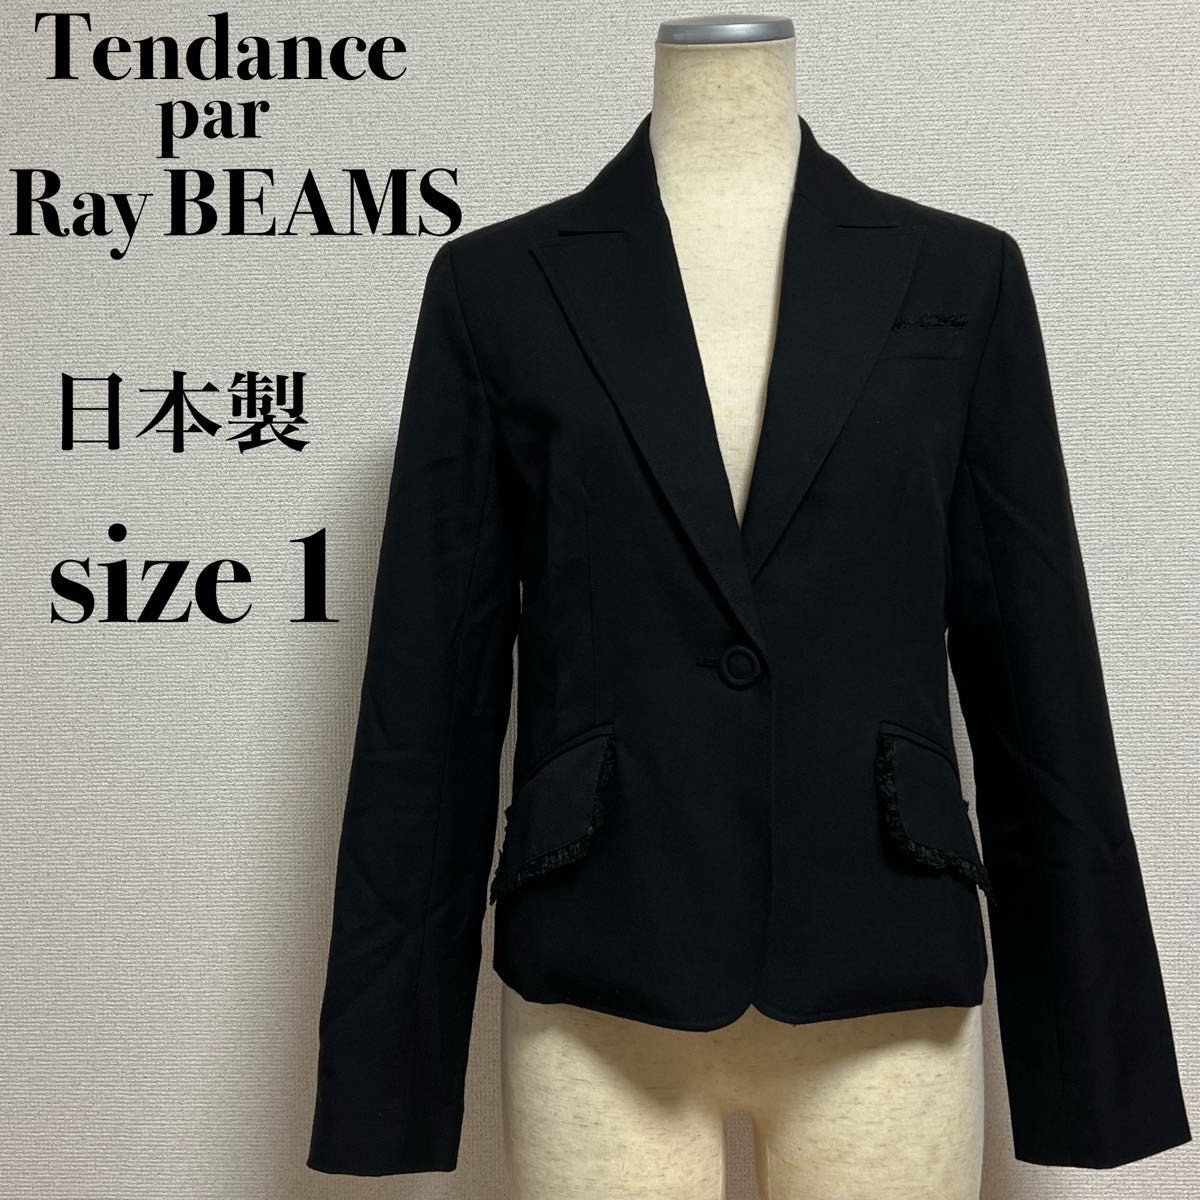 Tendance par Ray BEAM テーラードジャケット 美シルエット ウール混 日本製